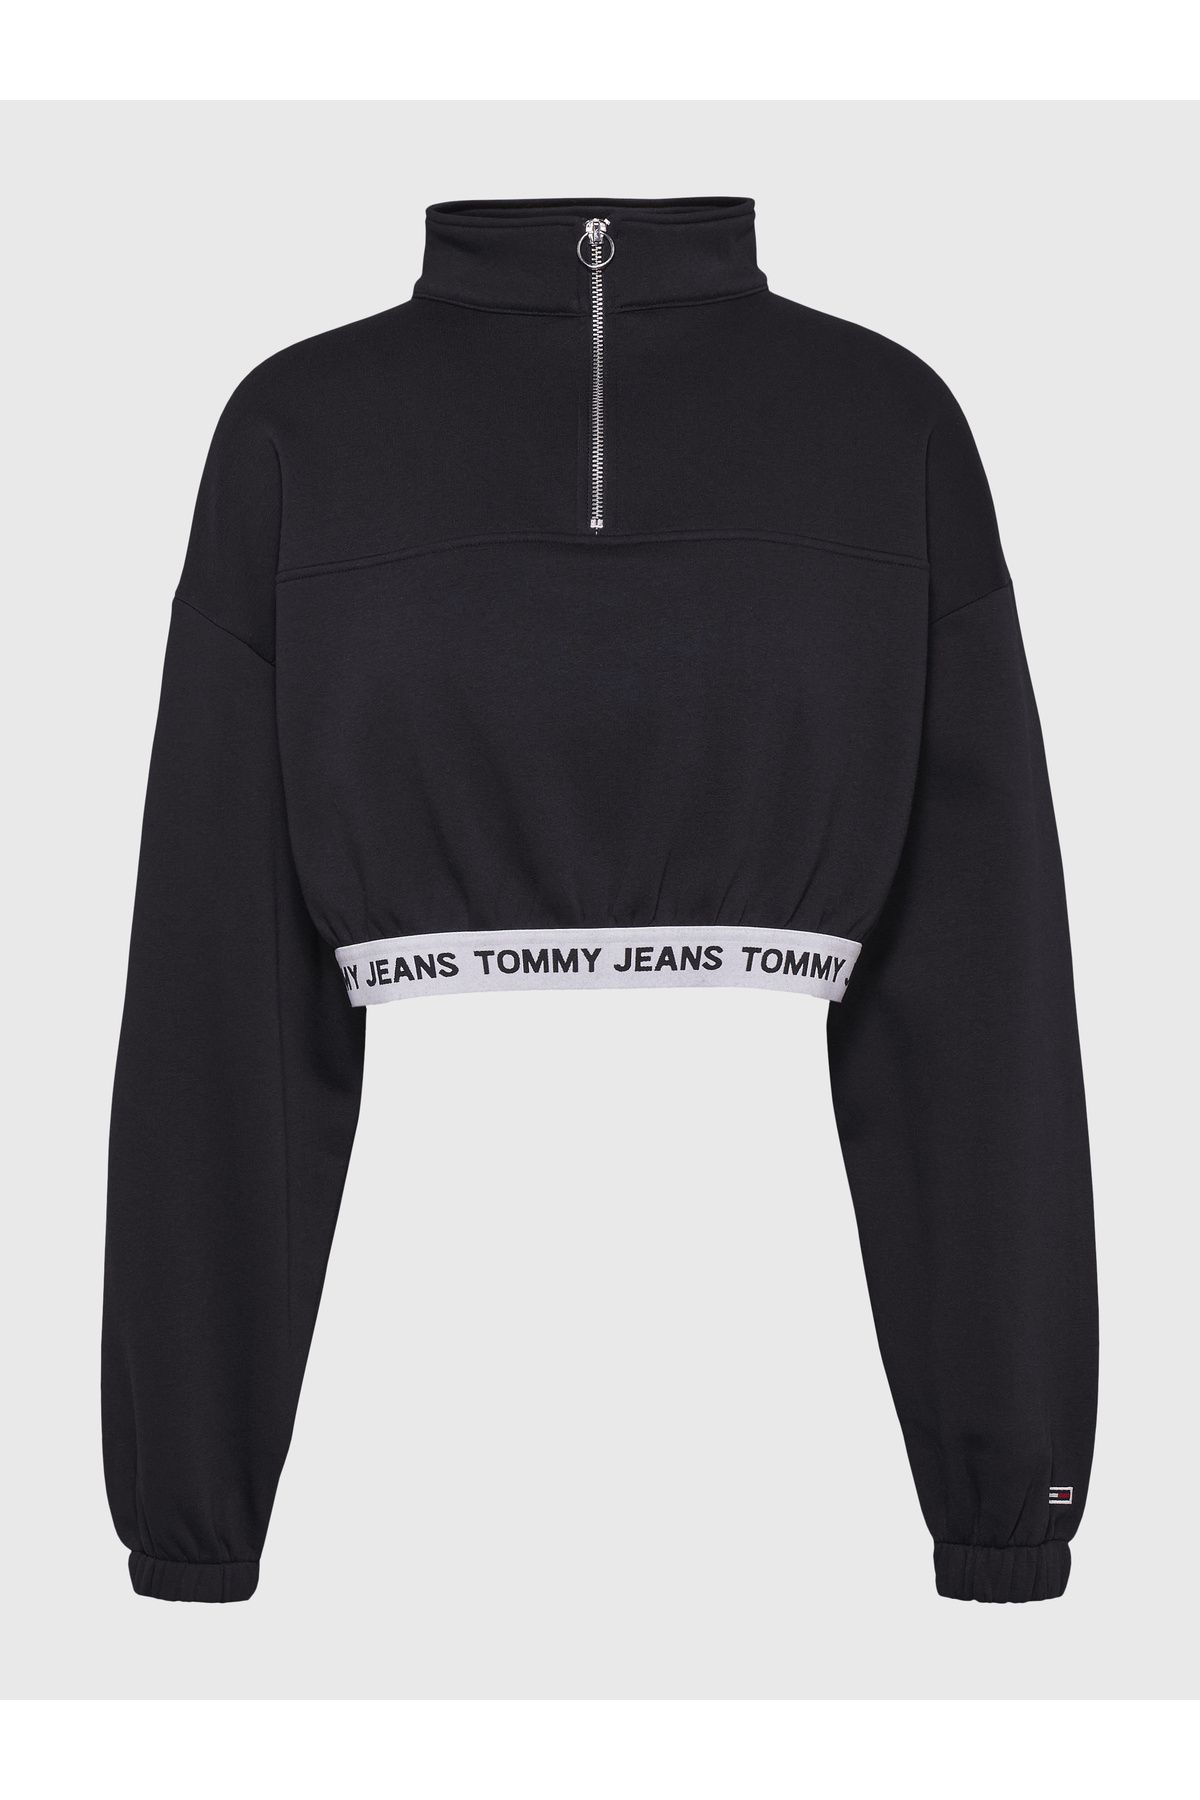 Tommy Hilfiger Kadın Siyah Sweatshirt